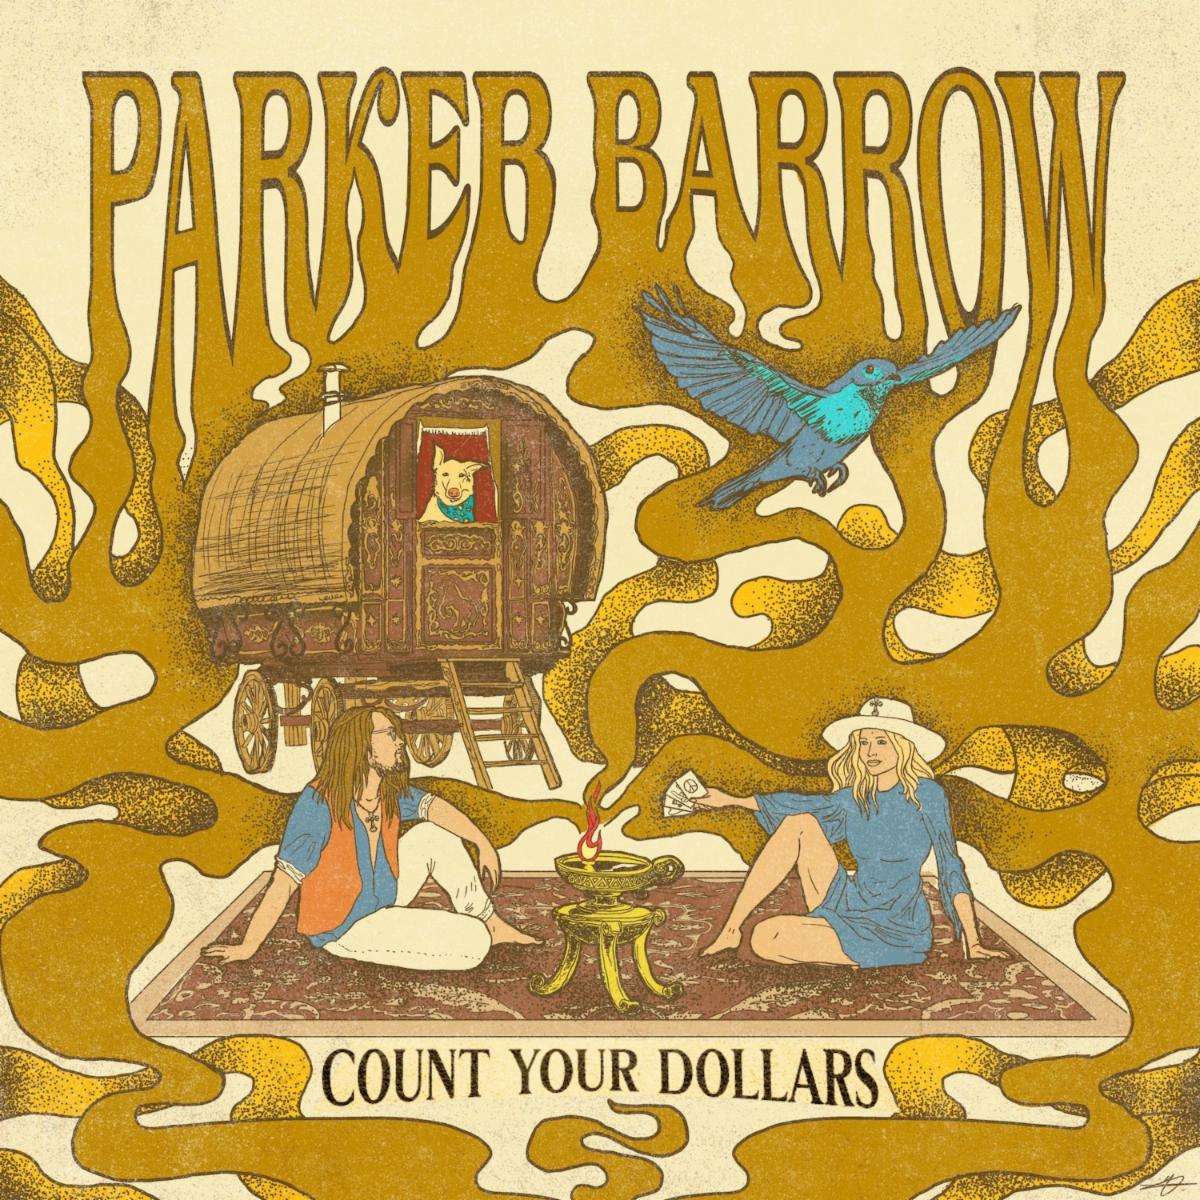 Parker Barrow